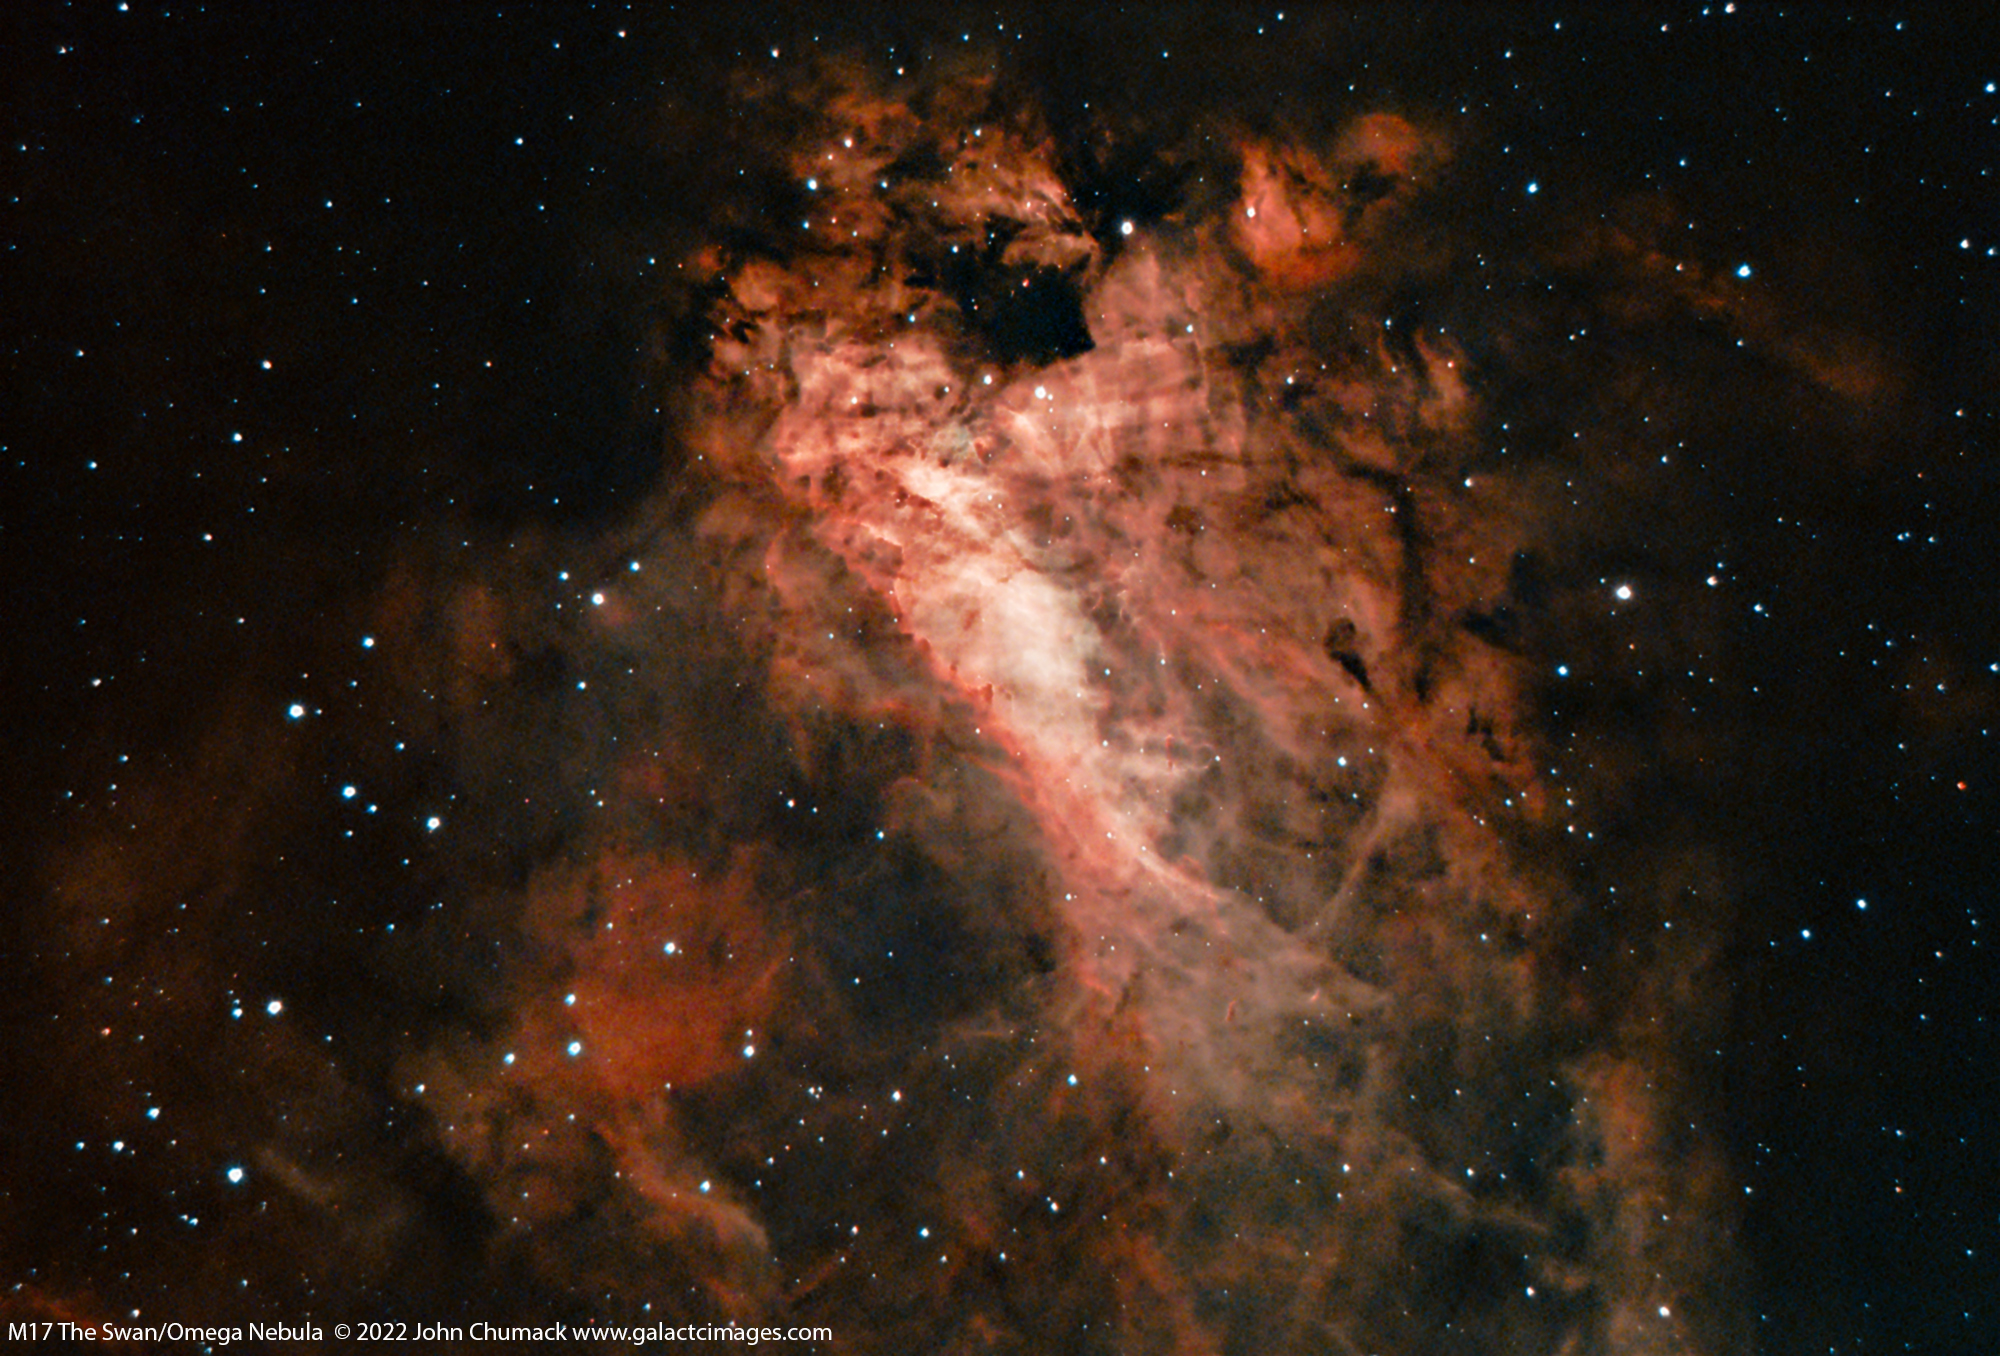 M17 The Swan or Omega Nebula Complex in Sagittarius